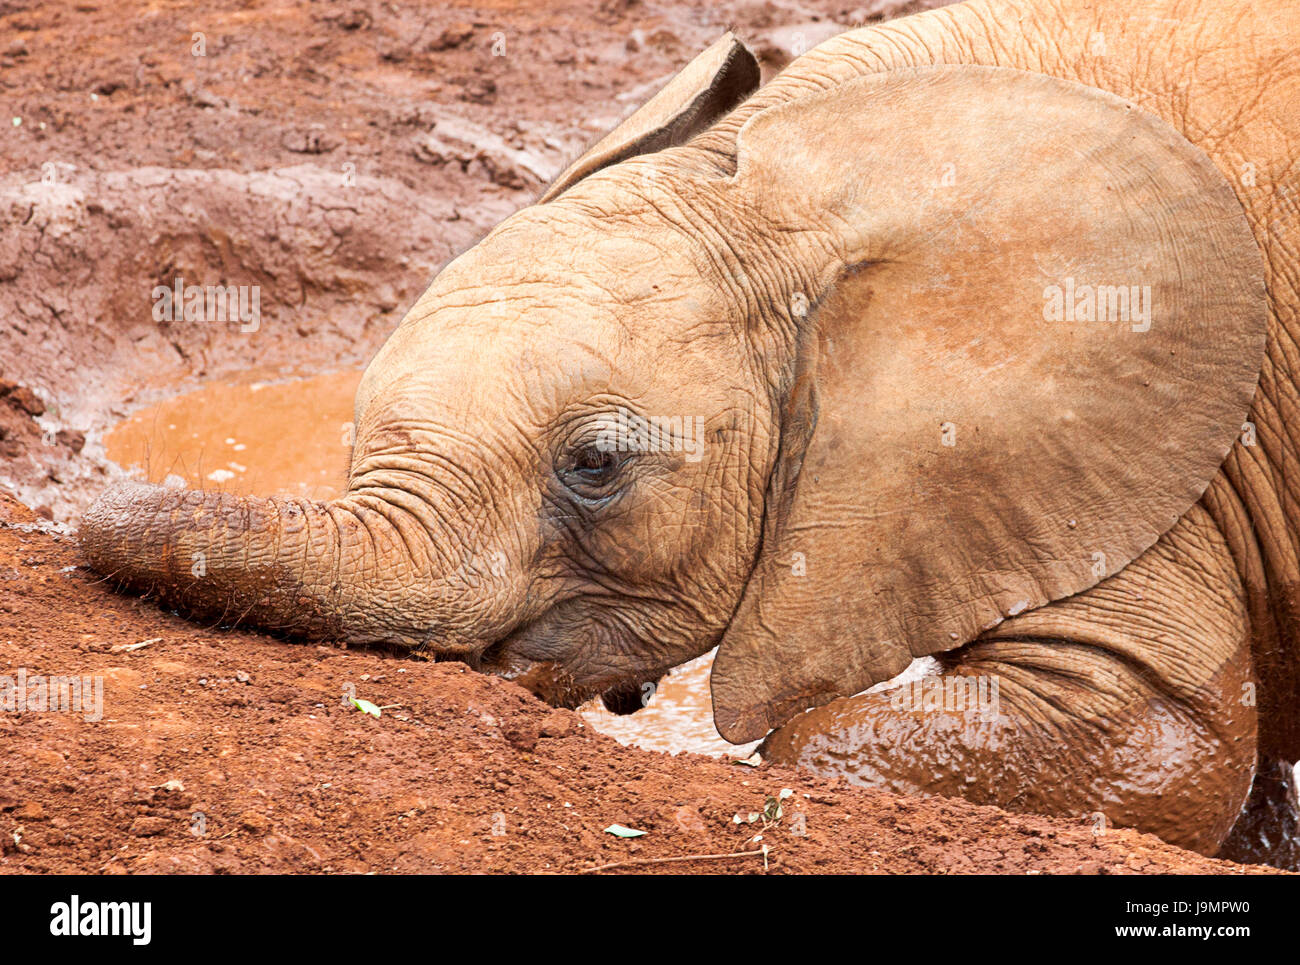 Baby elephant having a bath in muddy water Stock Photo